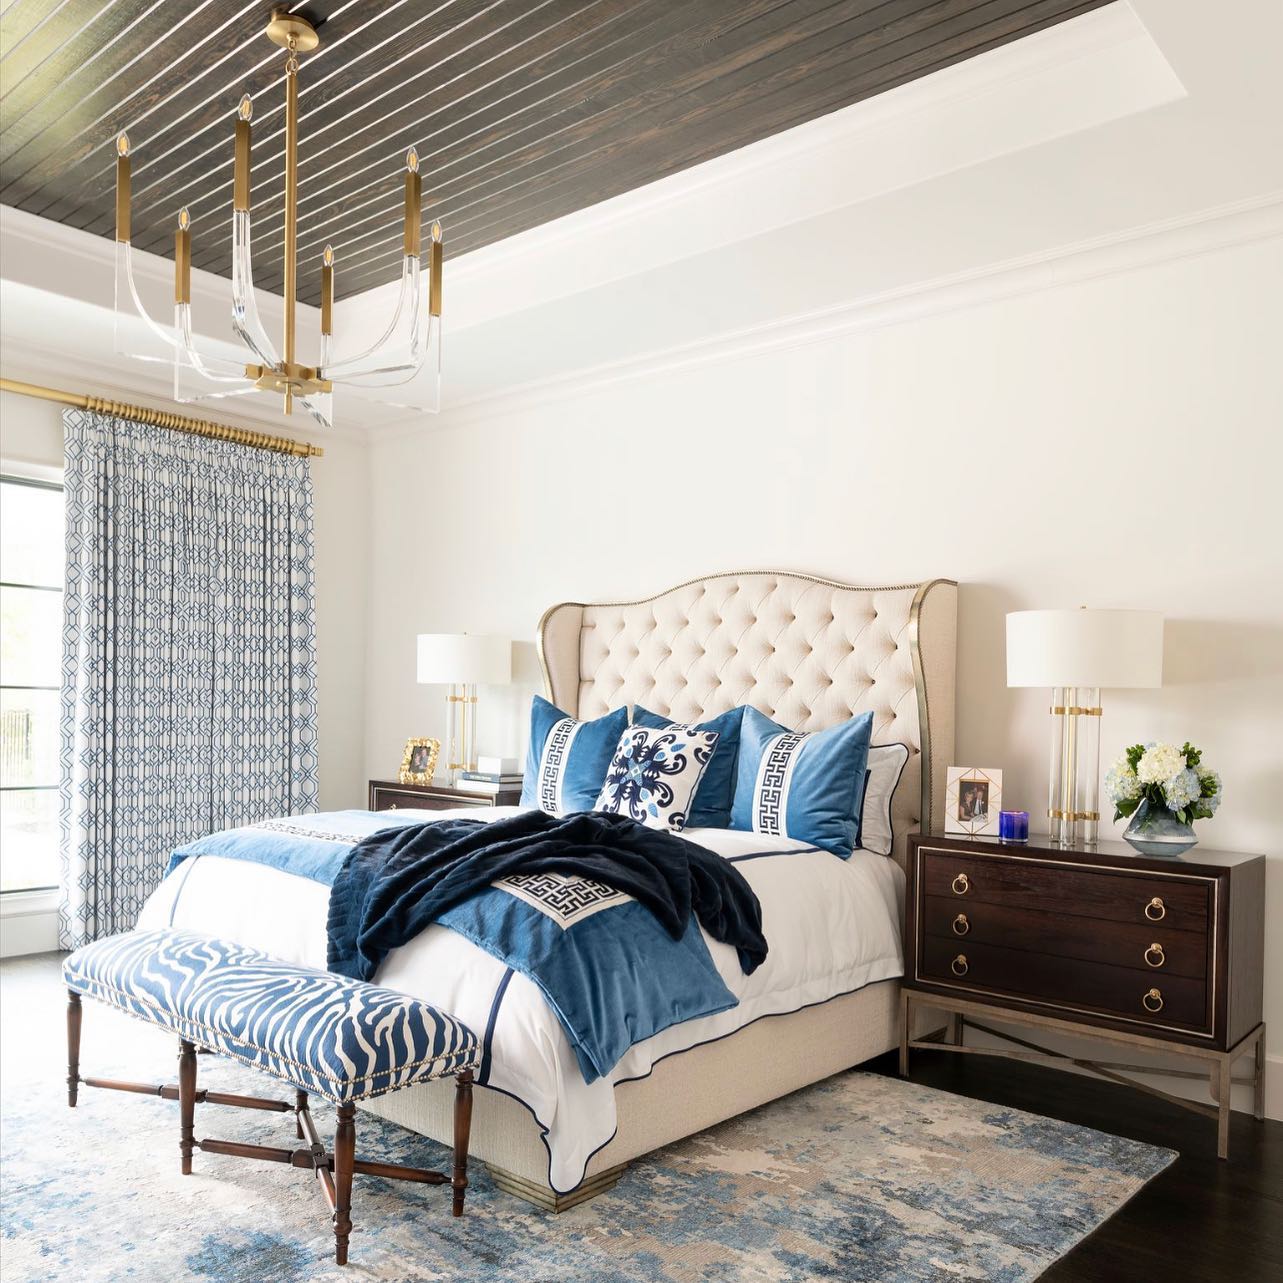 Sweet dreams are made of these 💙 #interiordesign by @designershay #bedroomdesign #Dallasdesign #teamIBB #bedroomdecor #customfurniture #luxuryinteriors #primarybedroom #custombedding #customdrapery